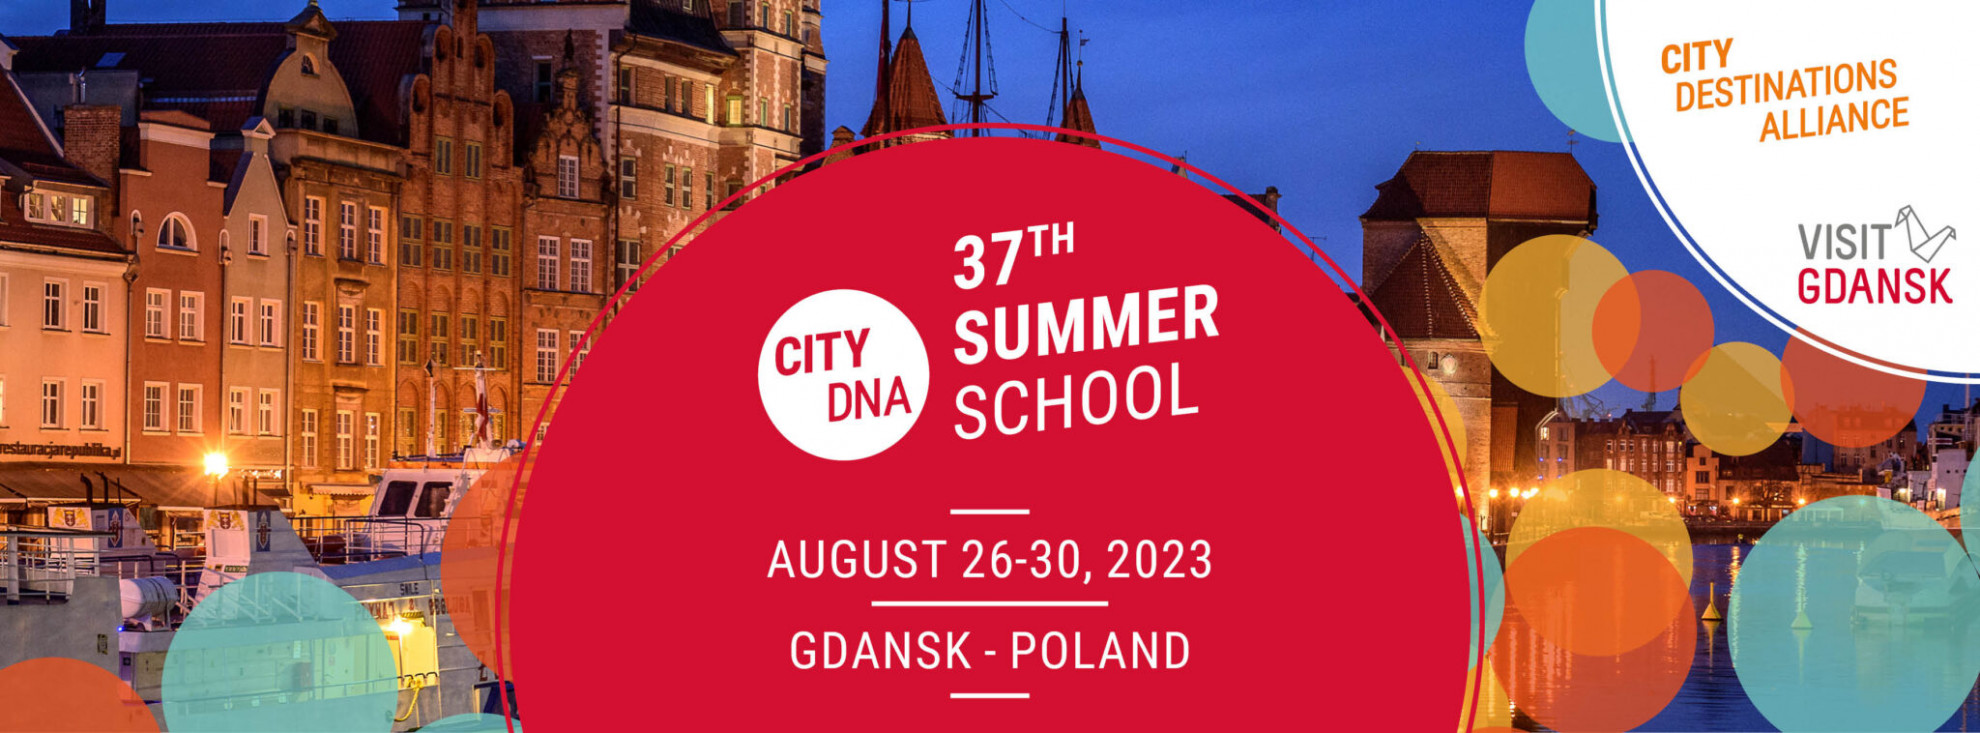 city-destinations-alliance-summer-school-gdansk-poland-citydna.jpg